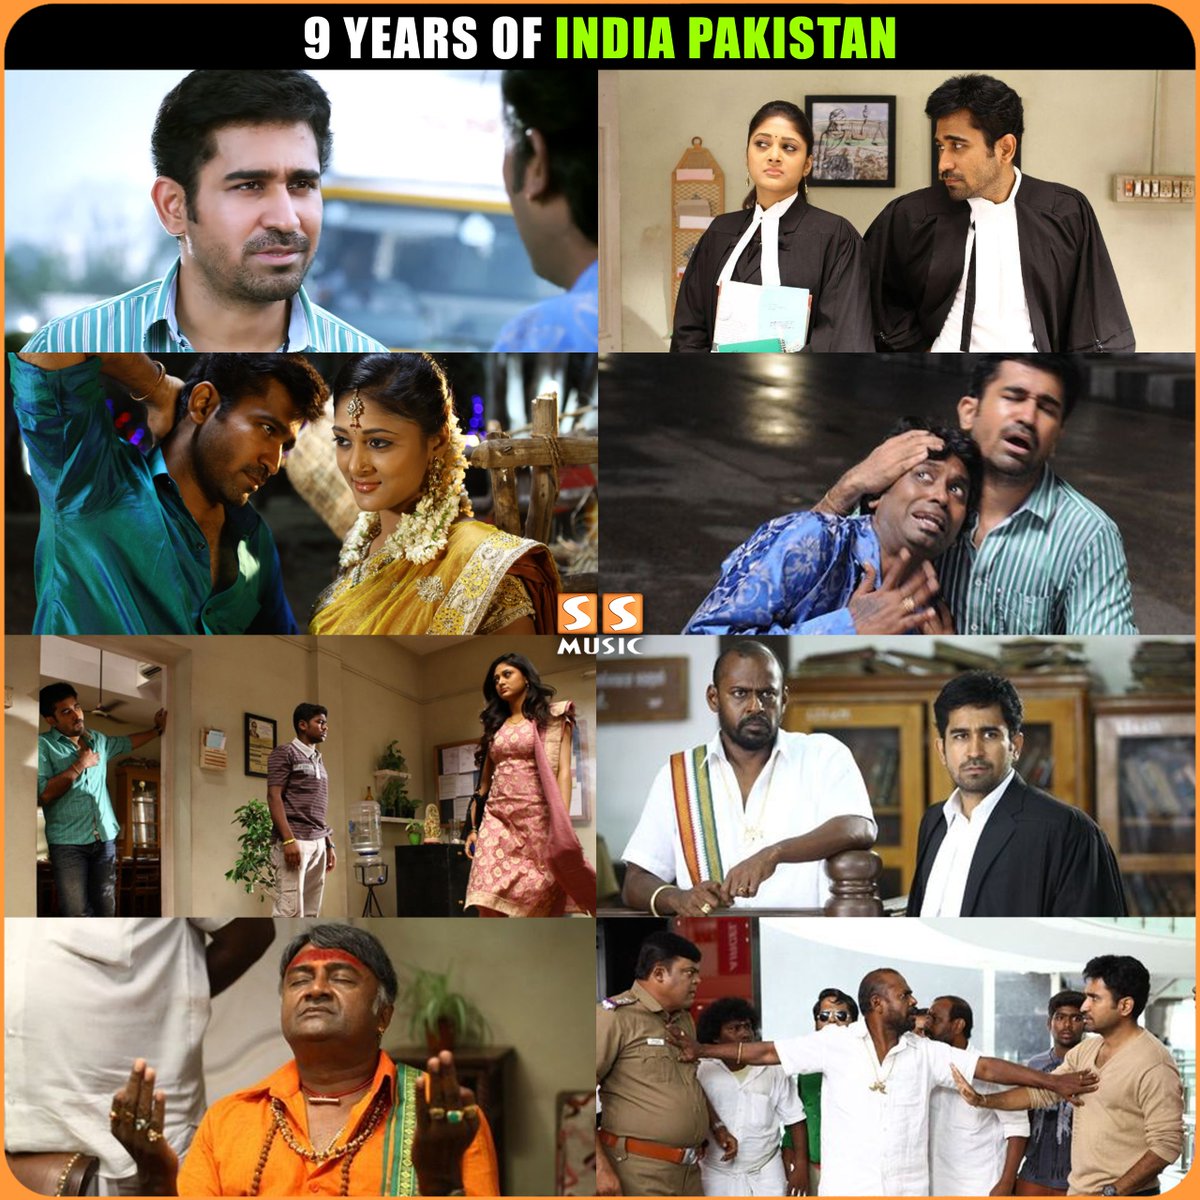 Yaarukulam Intha Padam Favourite? 😍
.
Celebrating 9 Years of #IndiaPakistan ❤️

@vijayantony #sushmaraj @Manikabali87 #NAnand #DheenaDevarajan #9YearsofIndiaPakistan #SSMusic